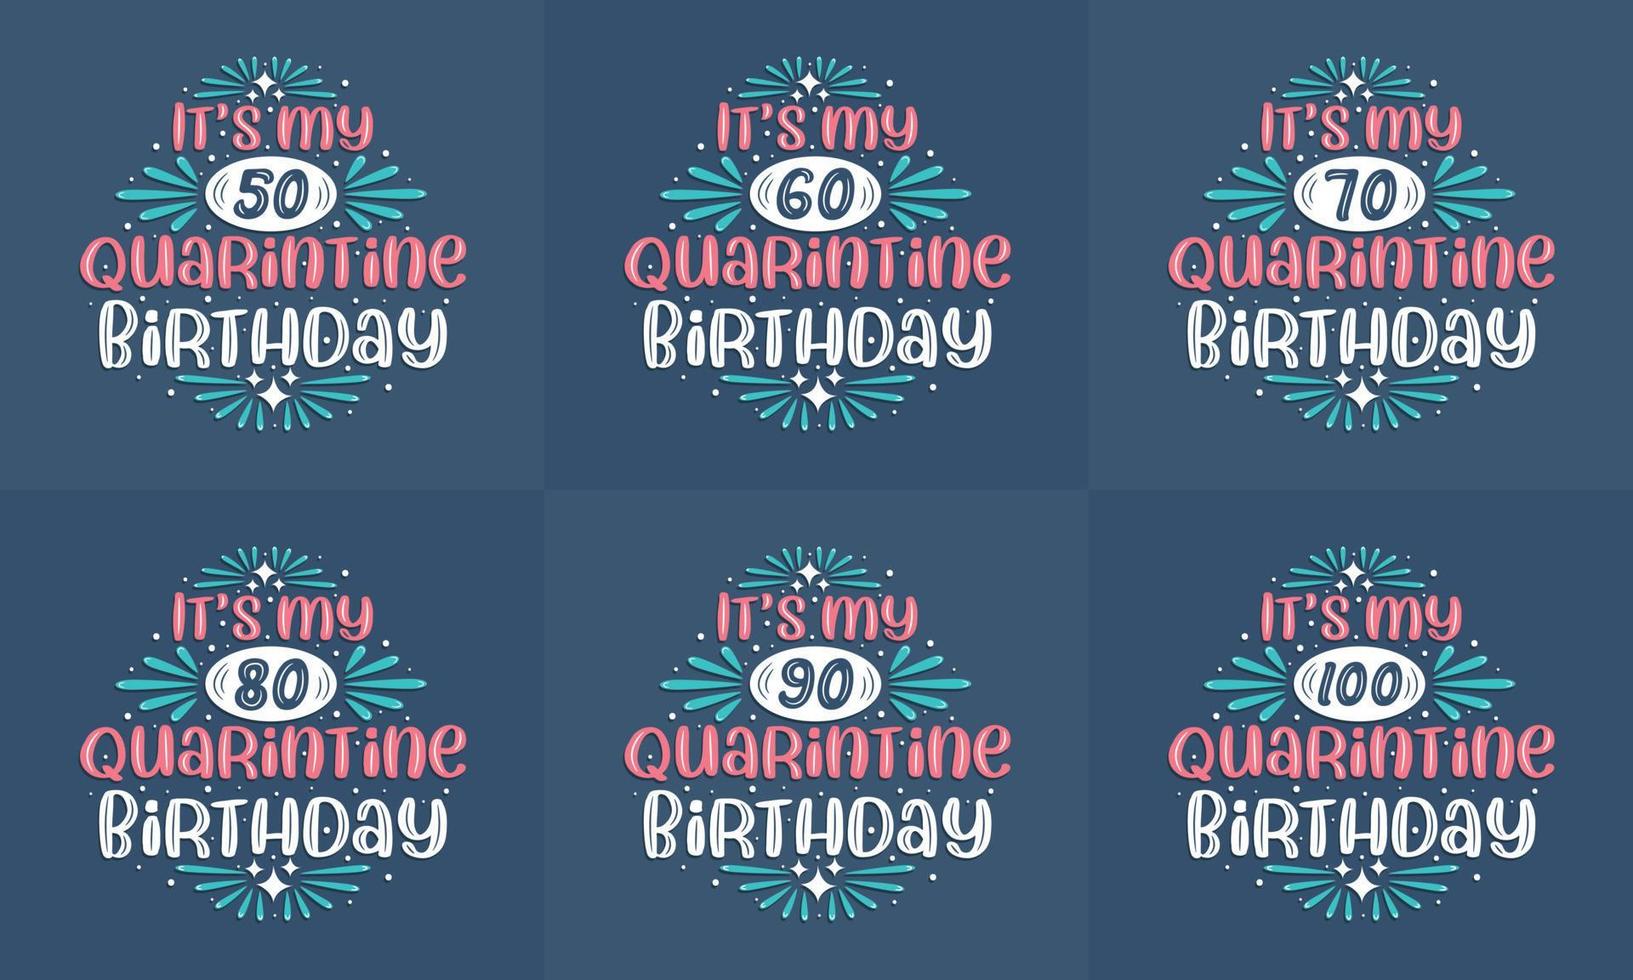 Quarantine Birthday design set. Quarantine Birthday celebration Typography quote design bundle. It's my 50, 60, 70, 80, 90, 100 Quarantine Birthday vector